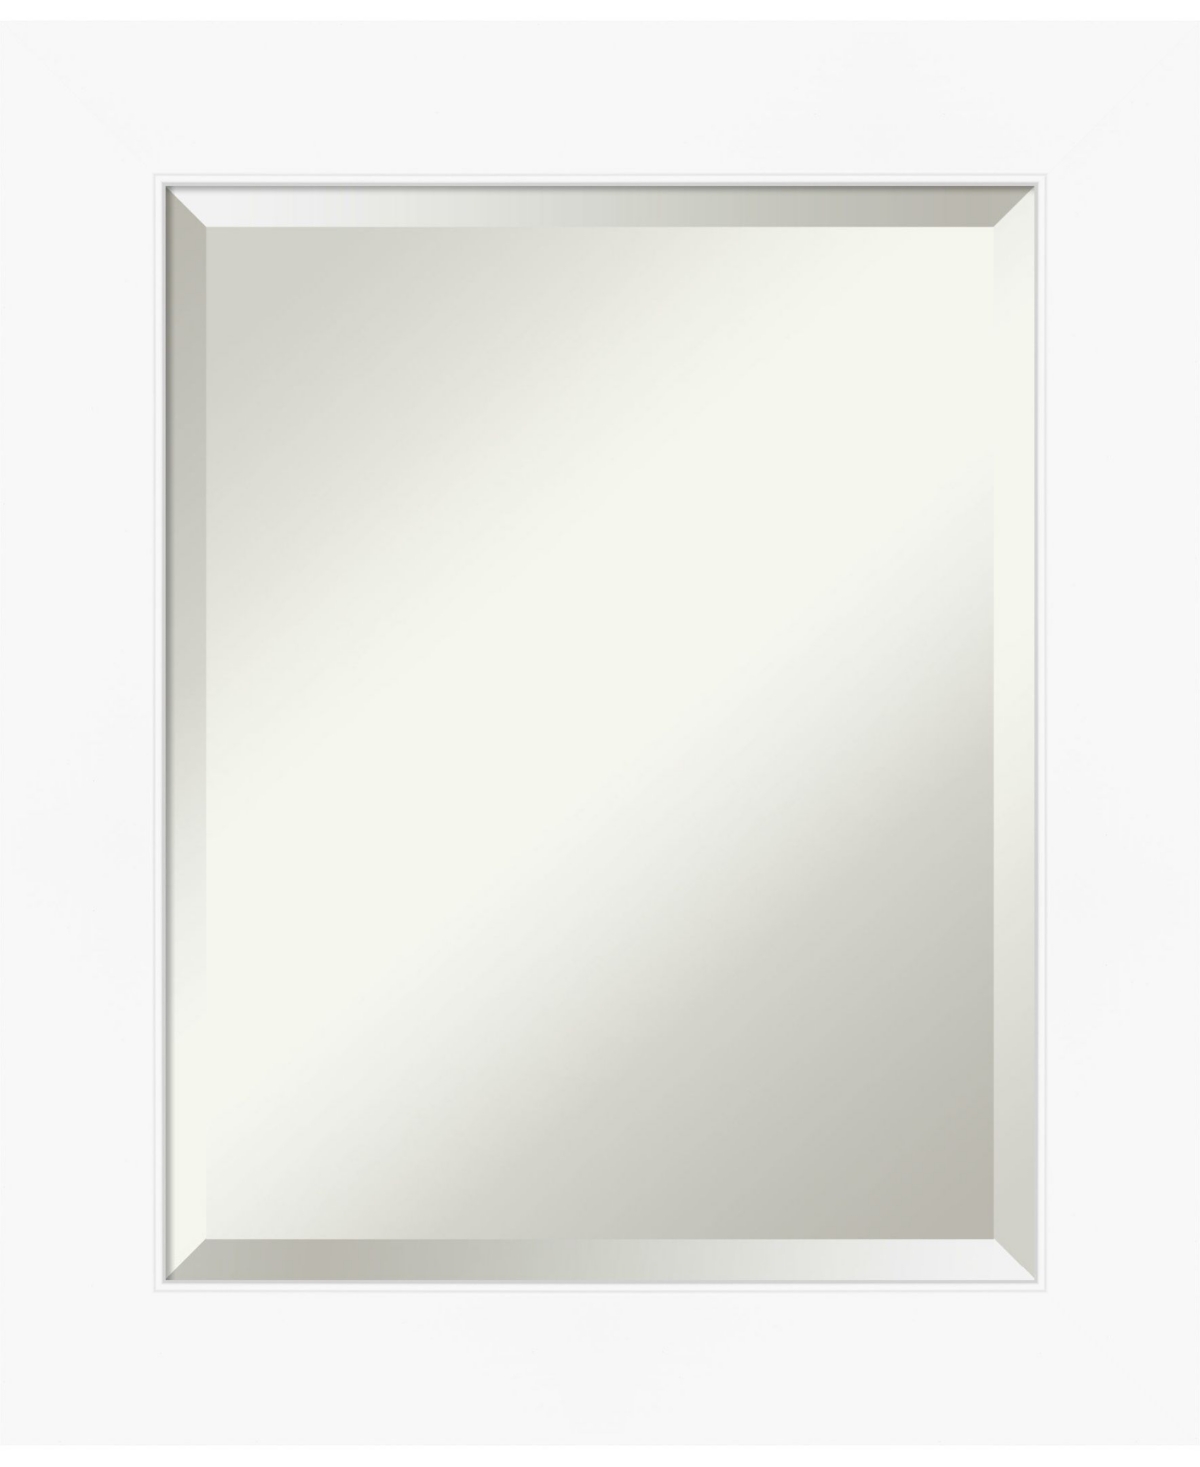 Amanti Art Cabinet Framed Bathroom Vanity Wall Mirror, 21.38" x 25.38"